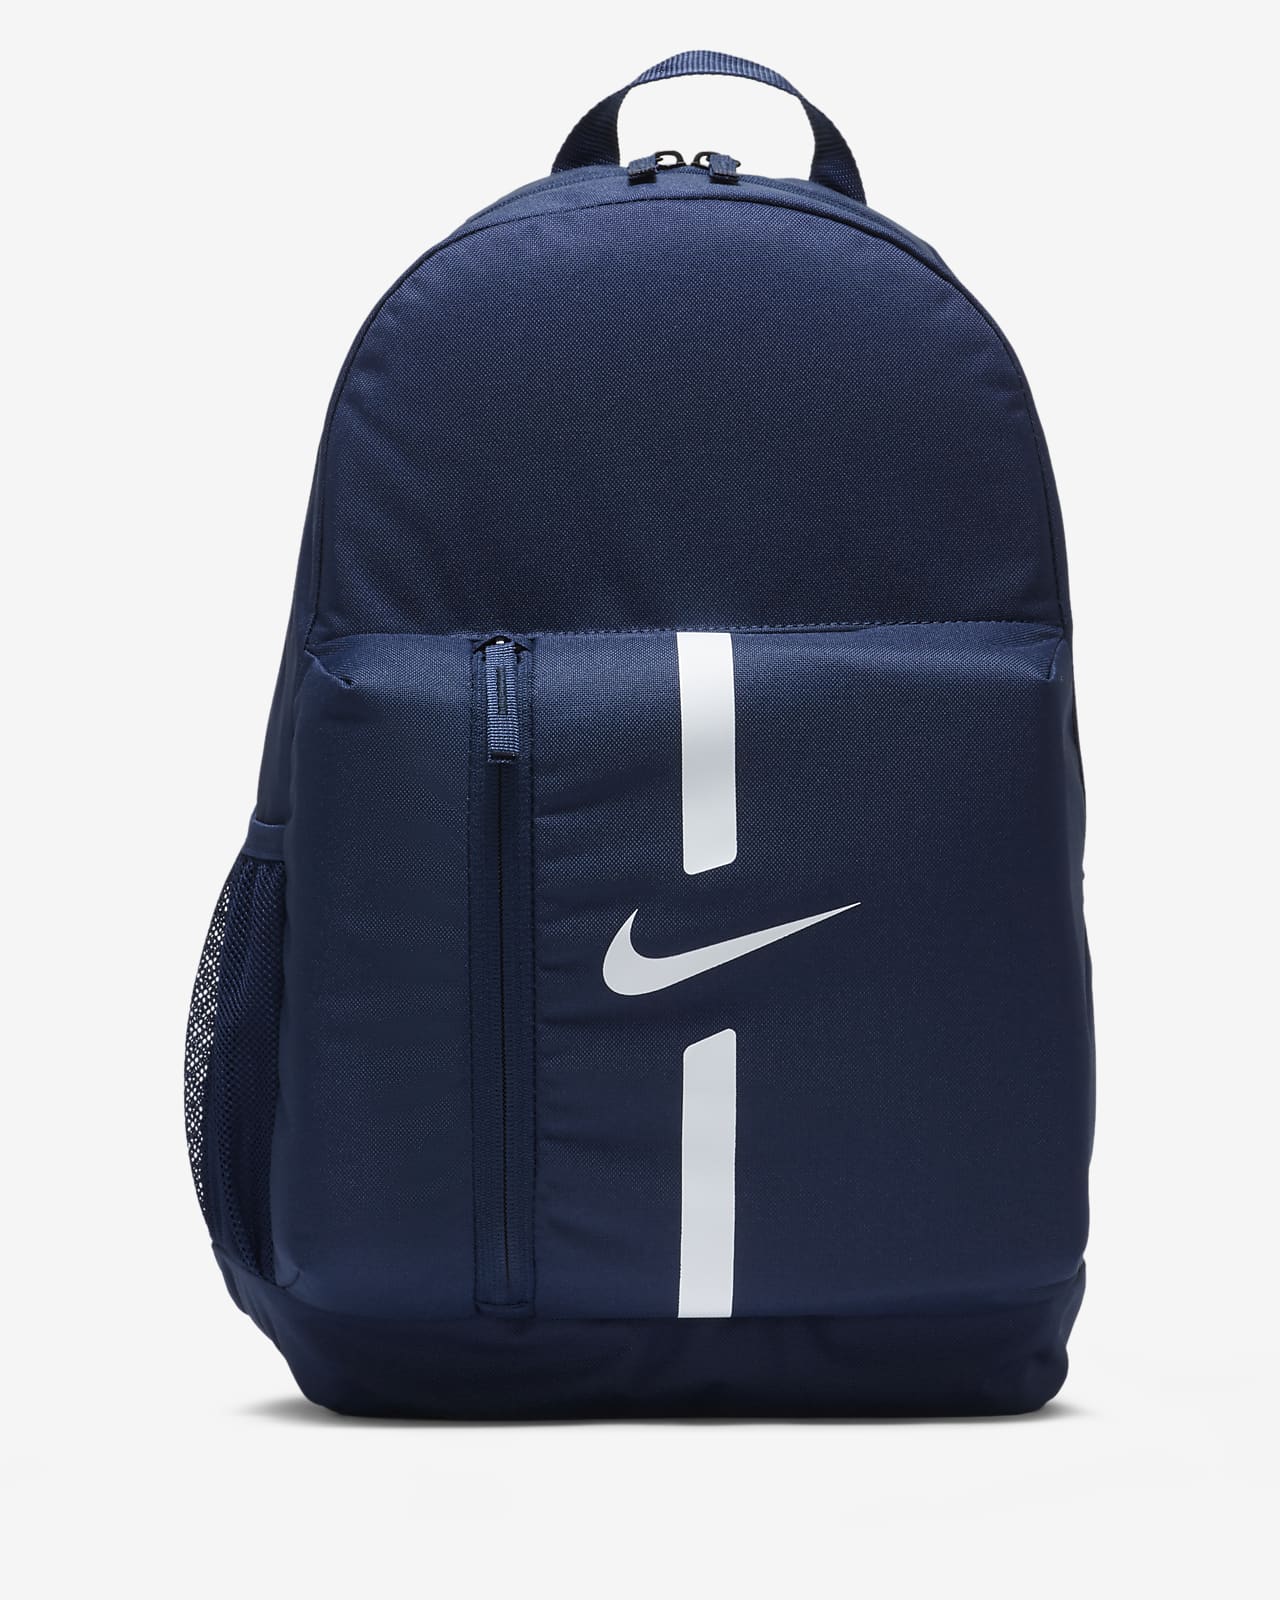 Nike Bags.r.us Backpacks Headband - Buy Nike Bags.r.us Backpacks Headband  online in India